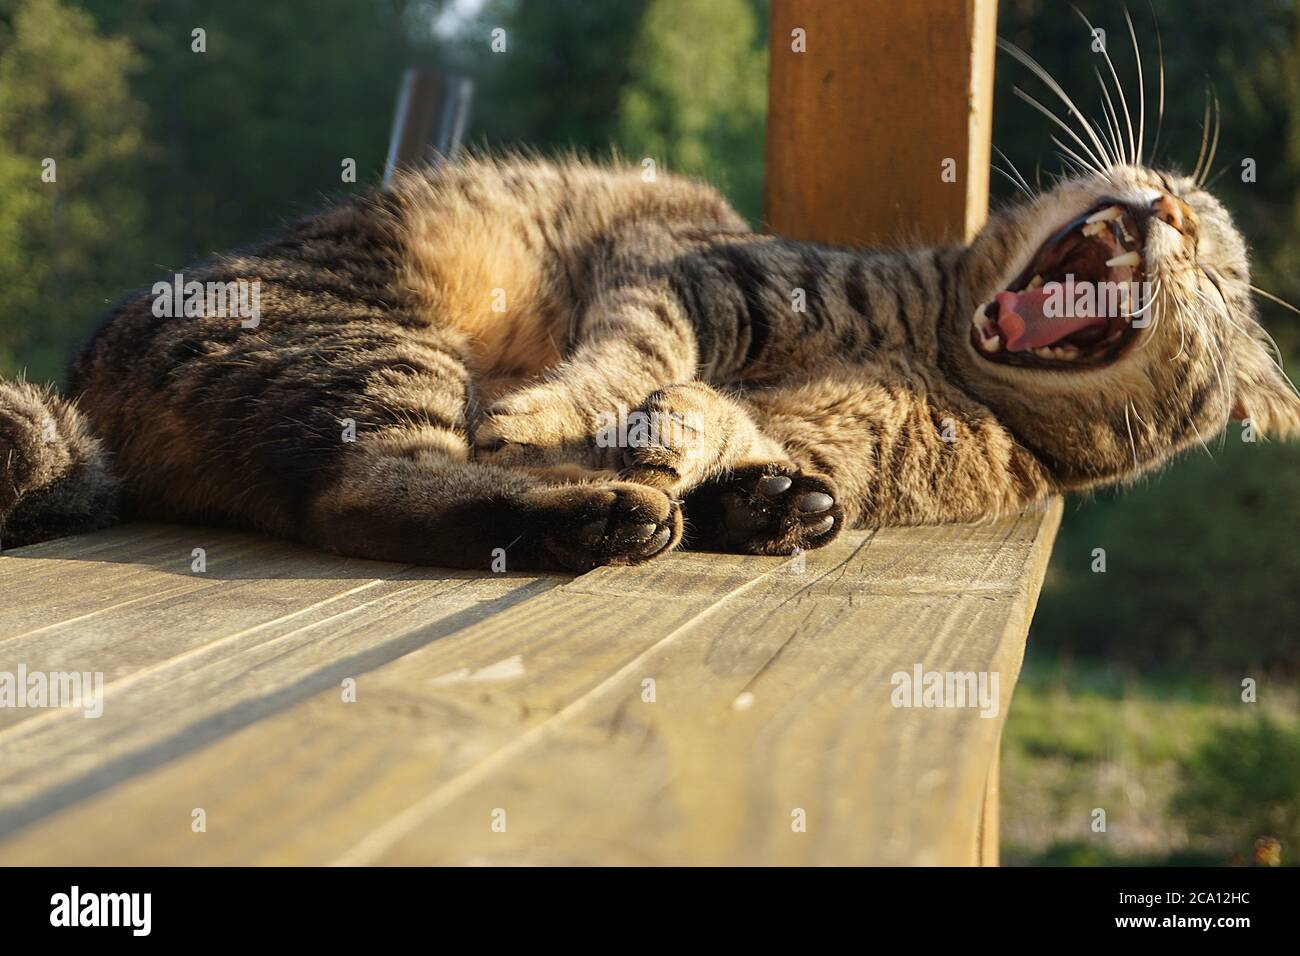 Cat yawning / Cat laughing Stock Photo